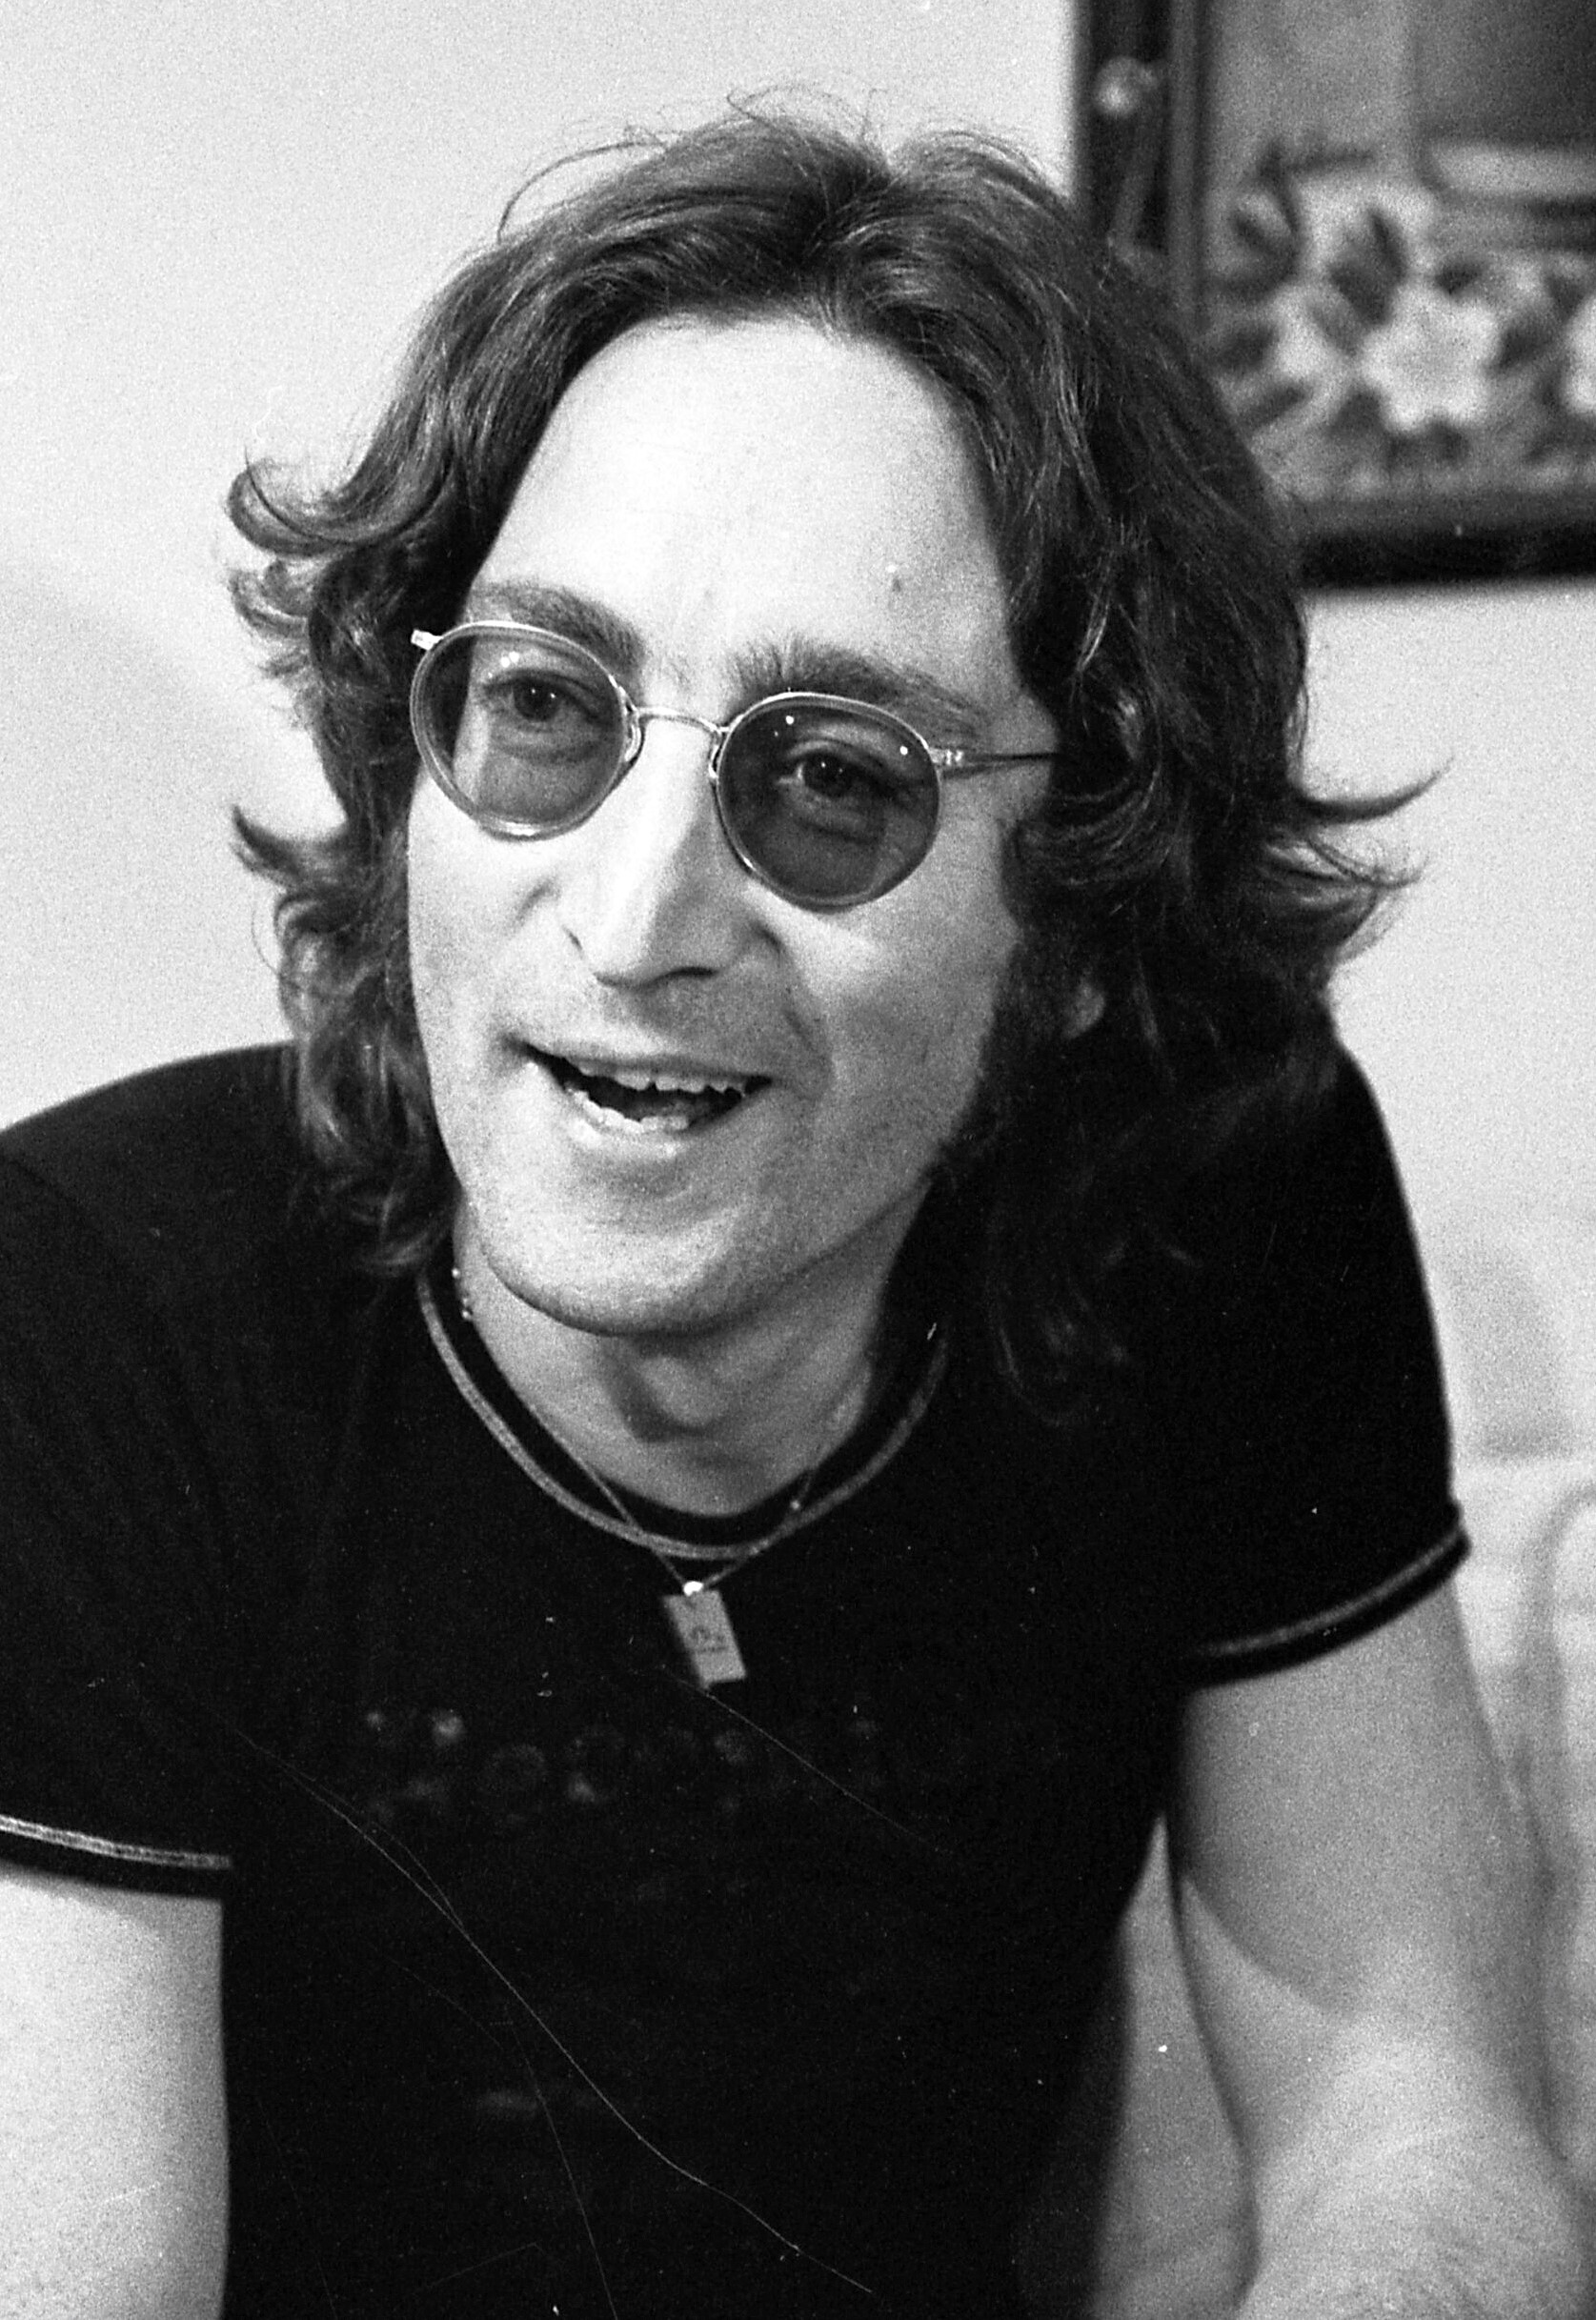 John Lennon being still alive